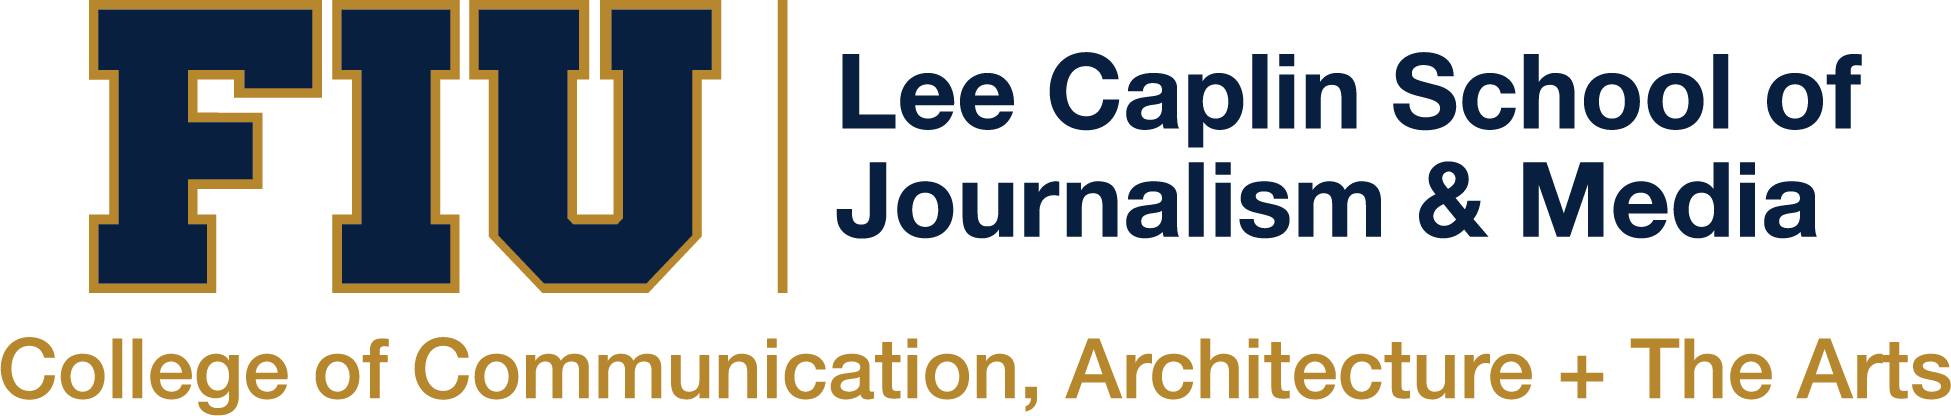 Lee Caplin School of Journalism & Media Logo